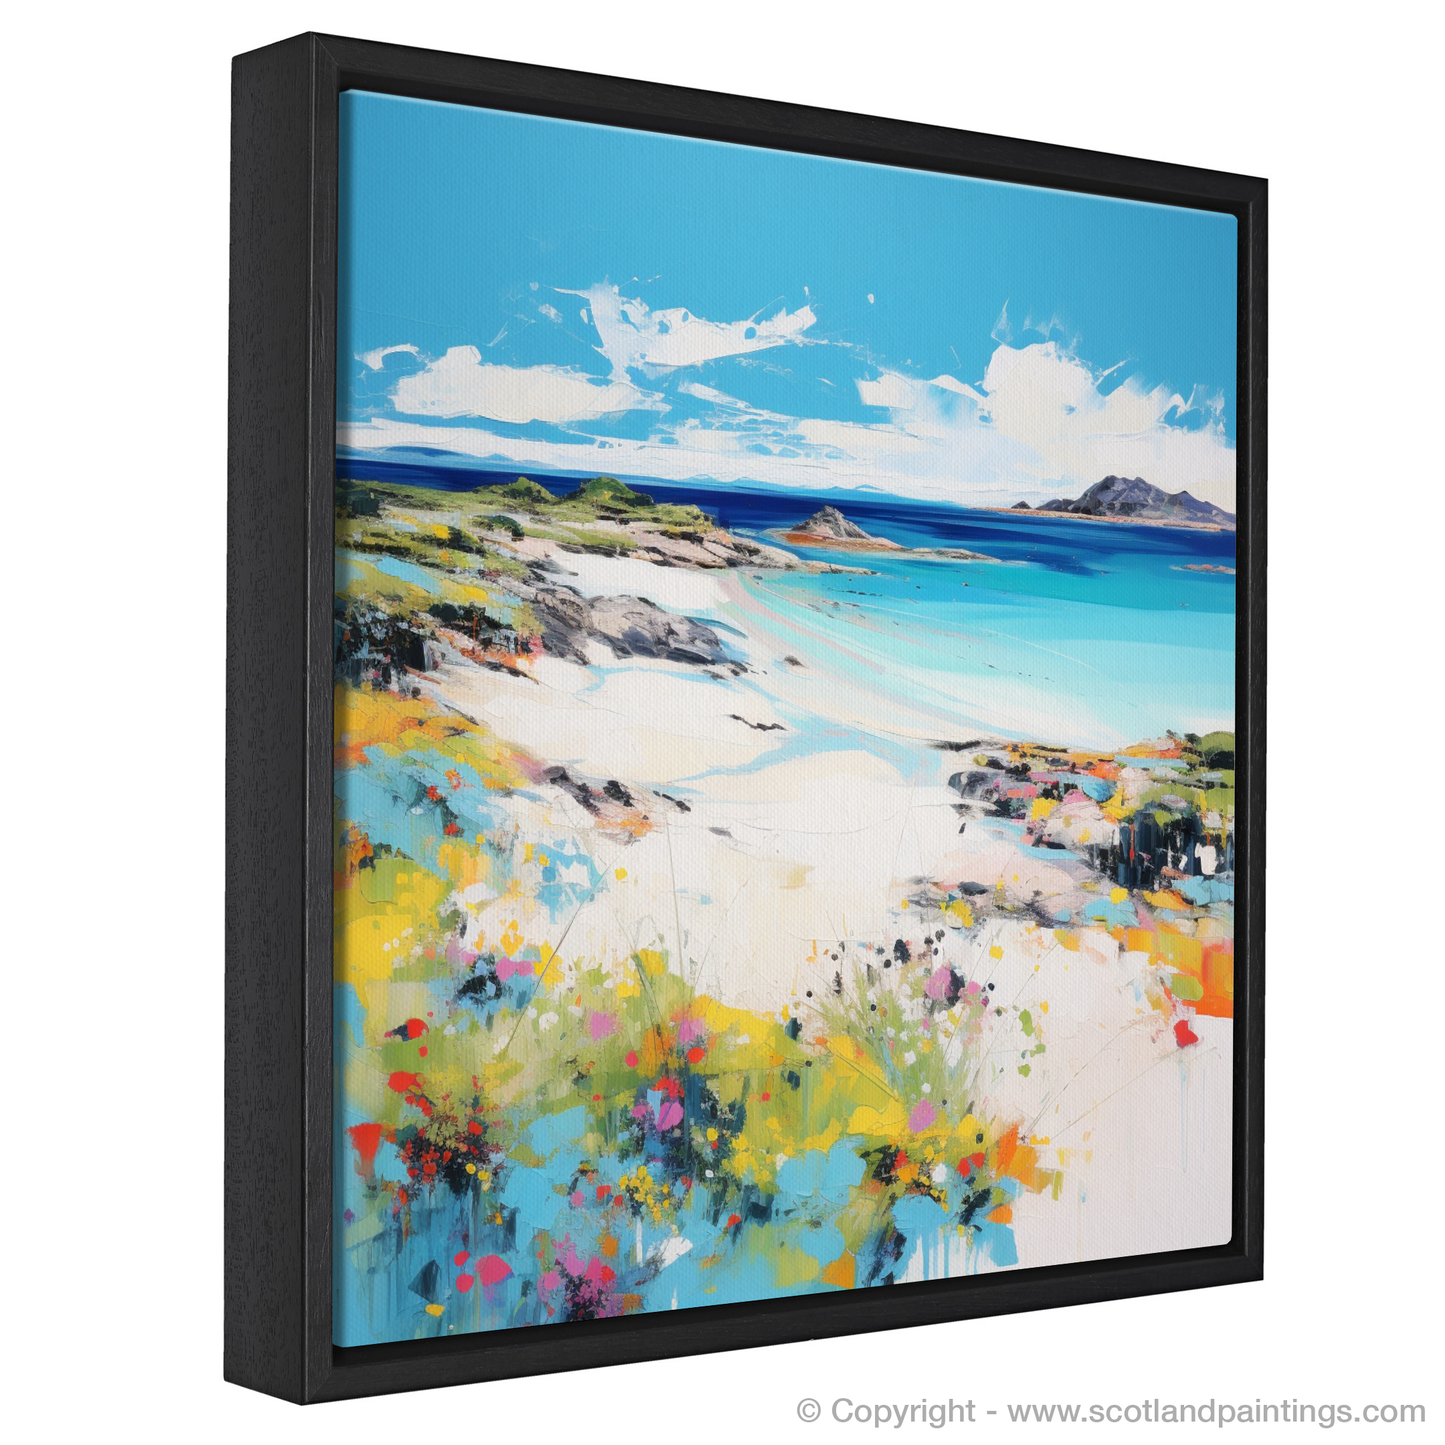 Painting and Art Print of Arisaig Beach, Arisaig in summer entitled "Arisaig Beach Summer Symphony".